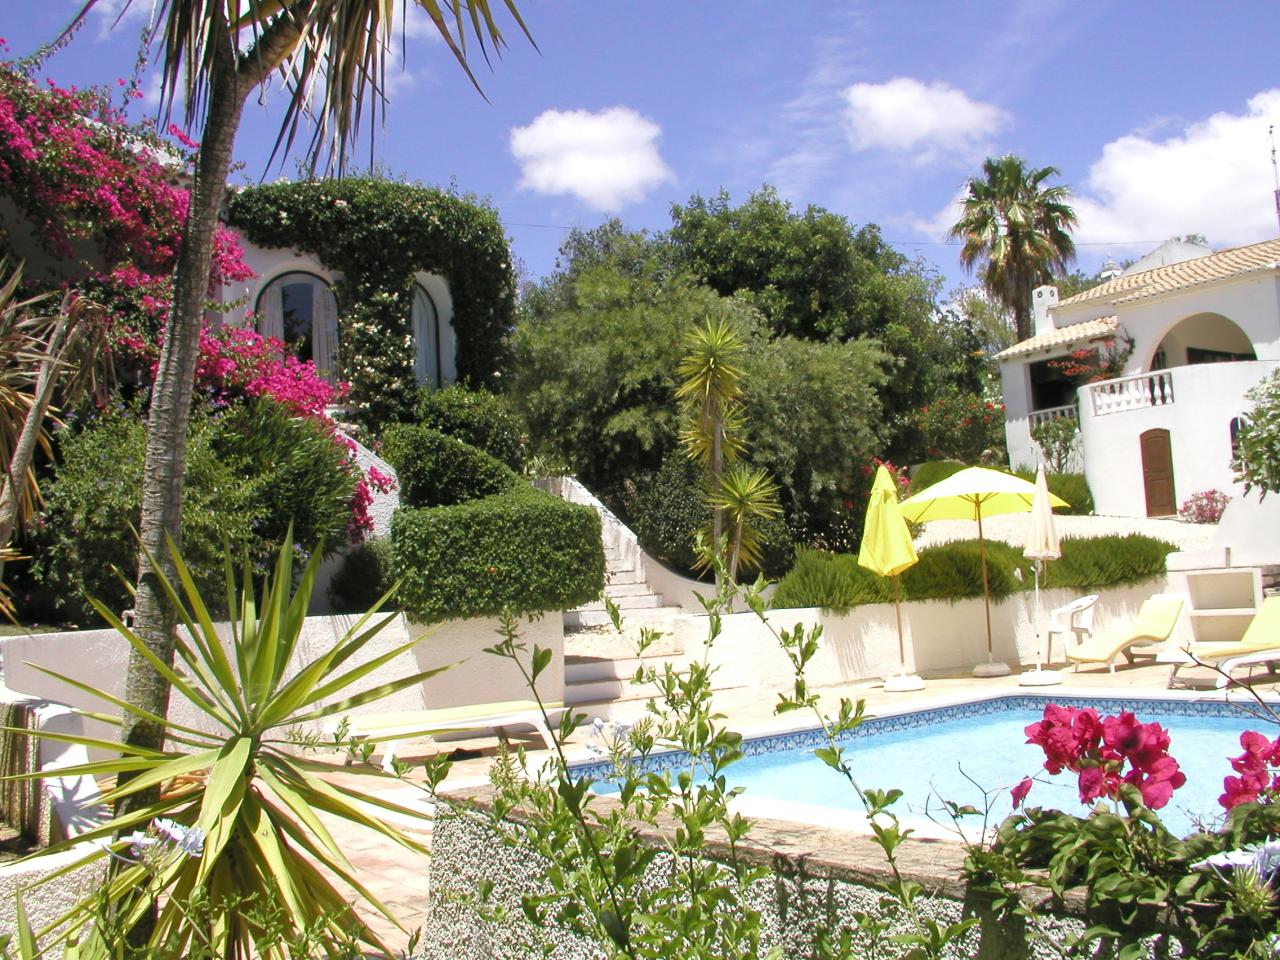 JPEG image - Villa garden & pool ...